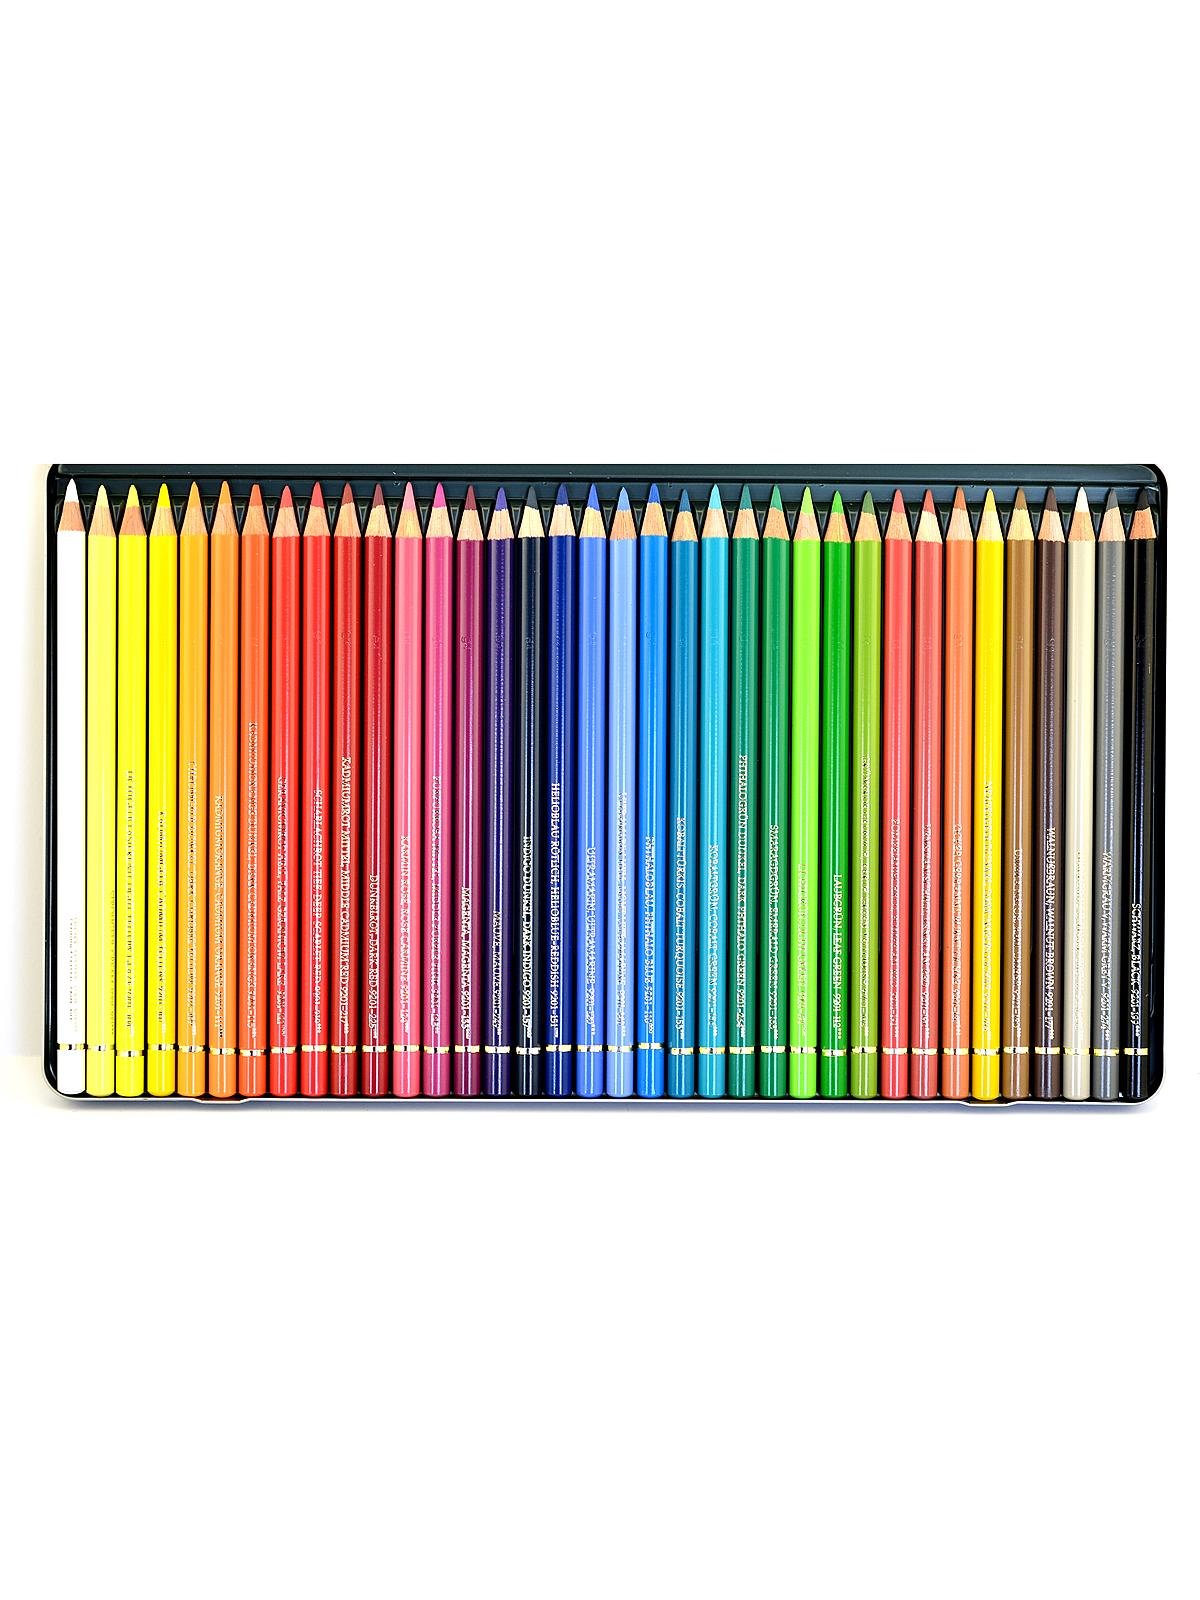 Faber-Castell Polychromos Color Pencil Sets - Sitaram Stationers